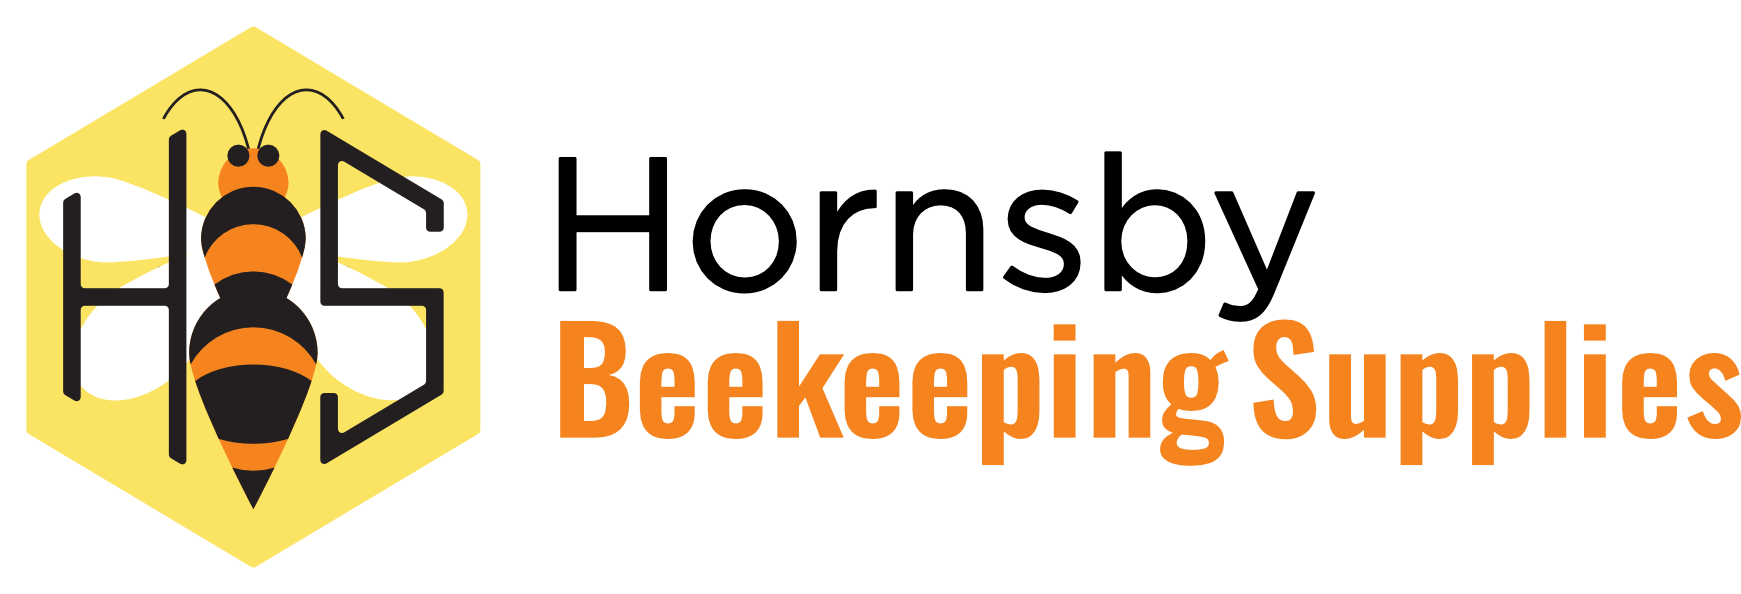 Hornsby Beekeeping Supplies